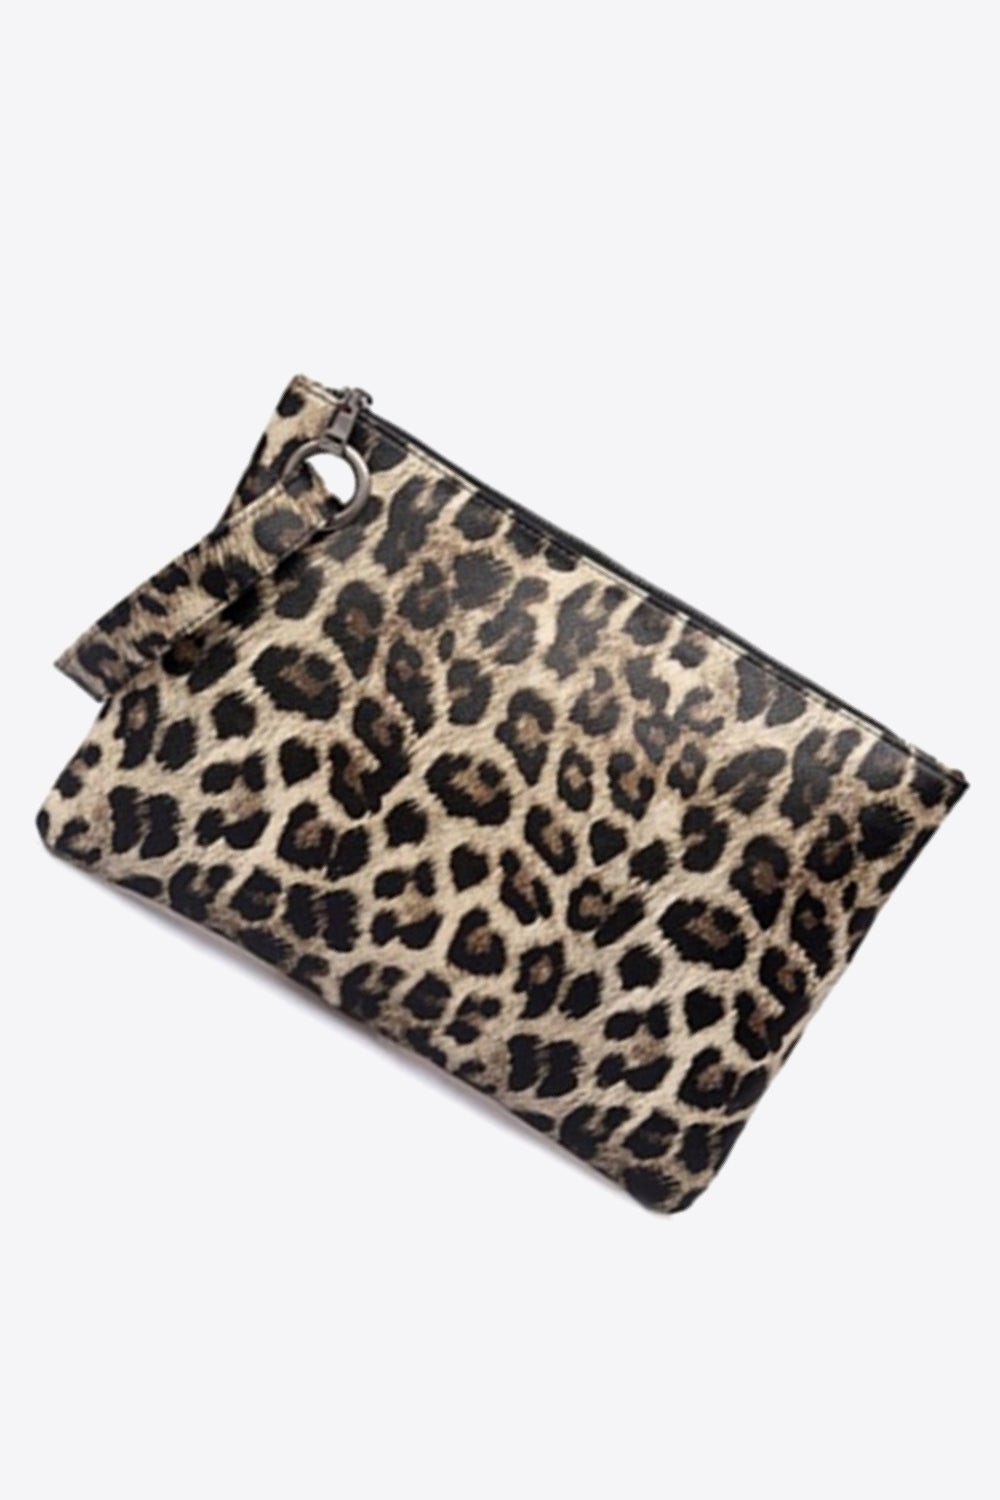 Leopard PU Leather Clutch - BloomBliss.com